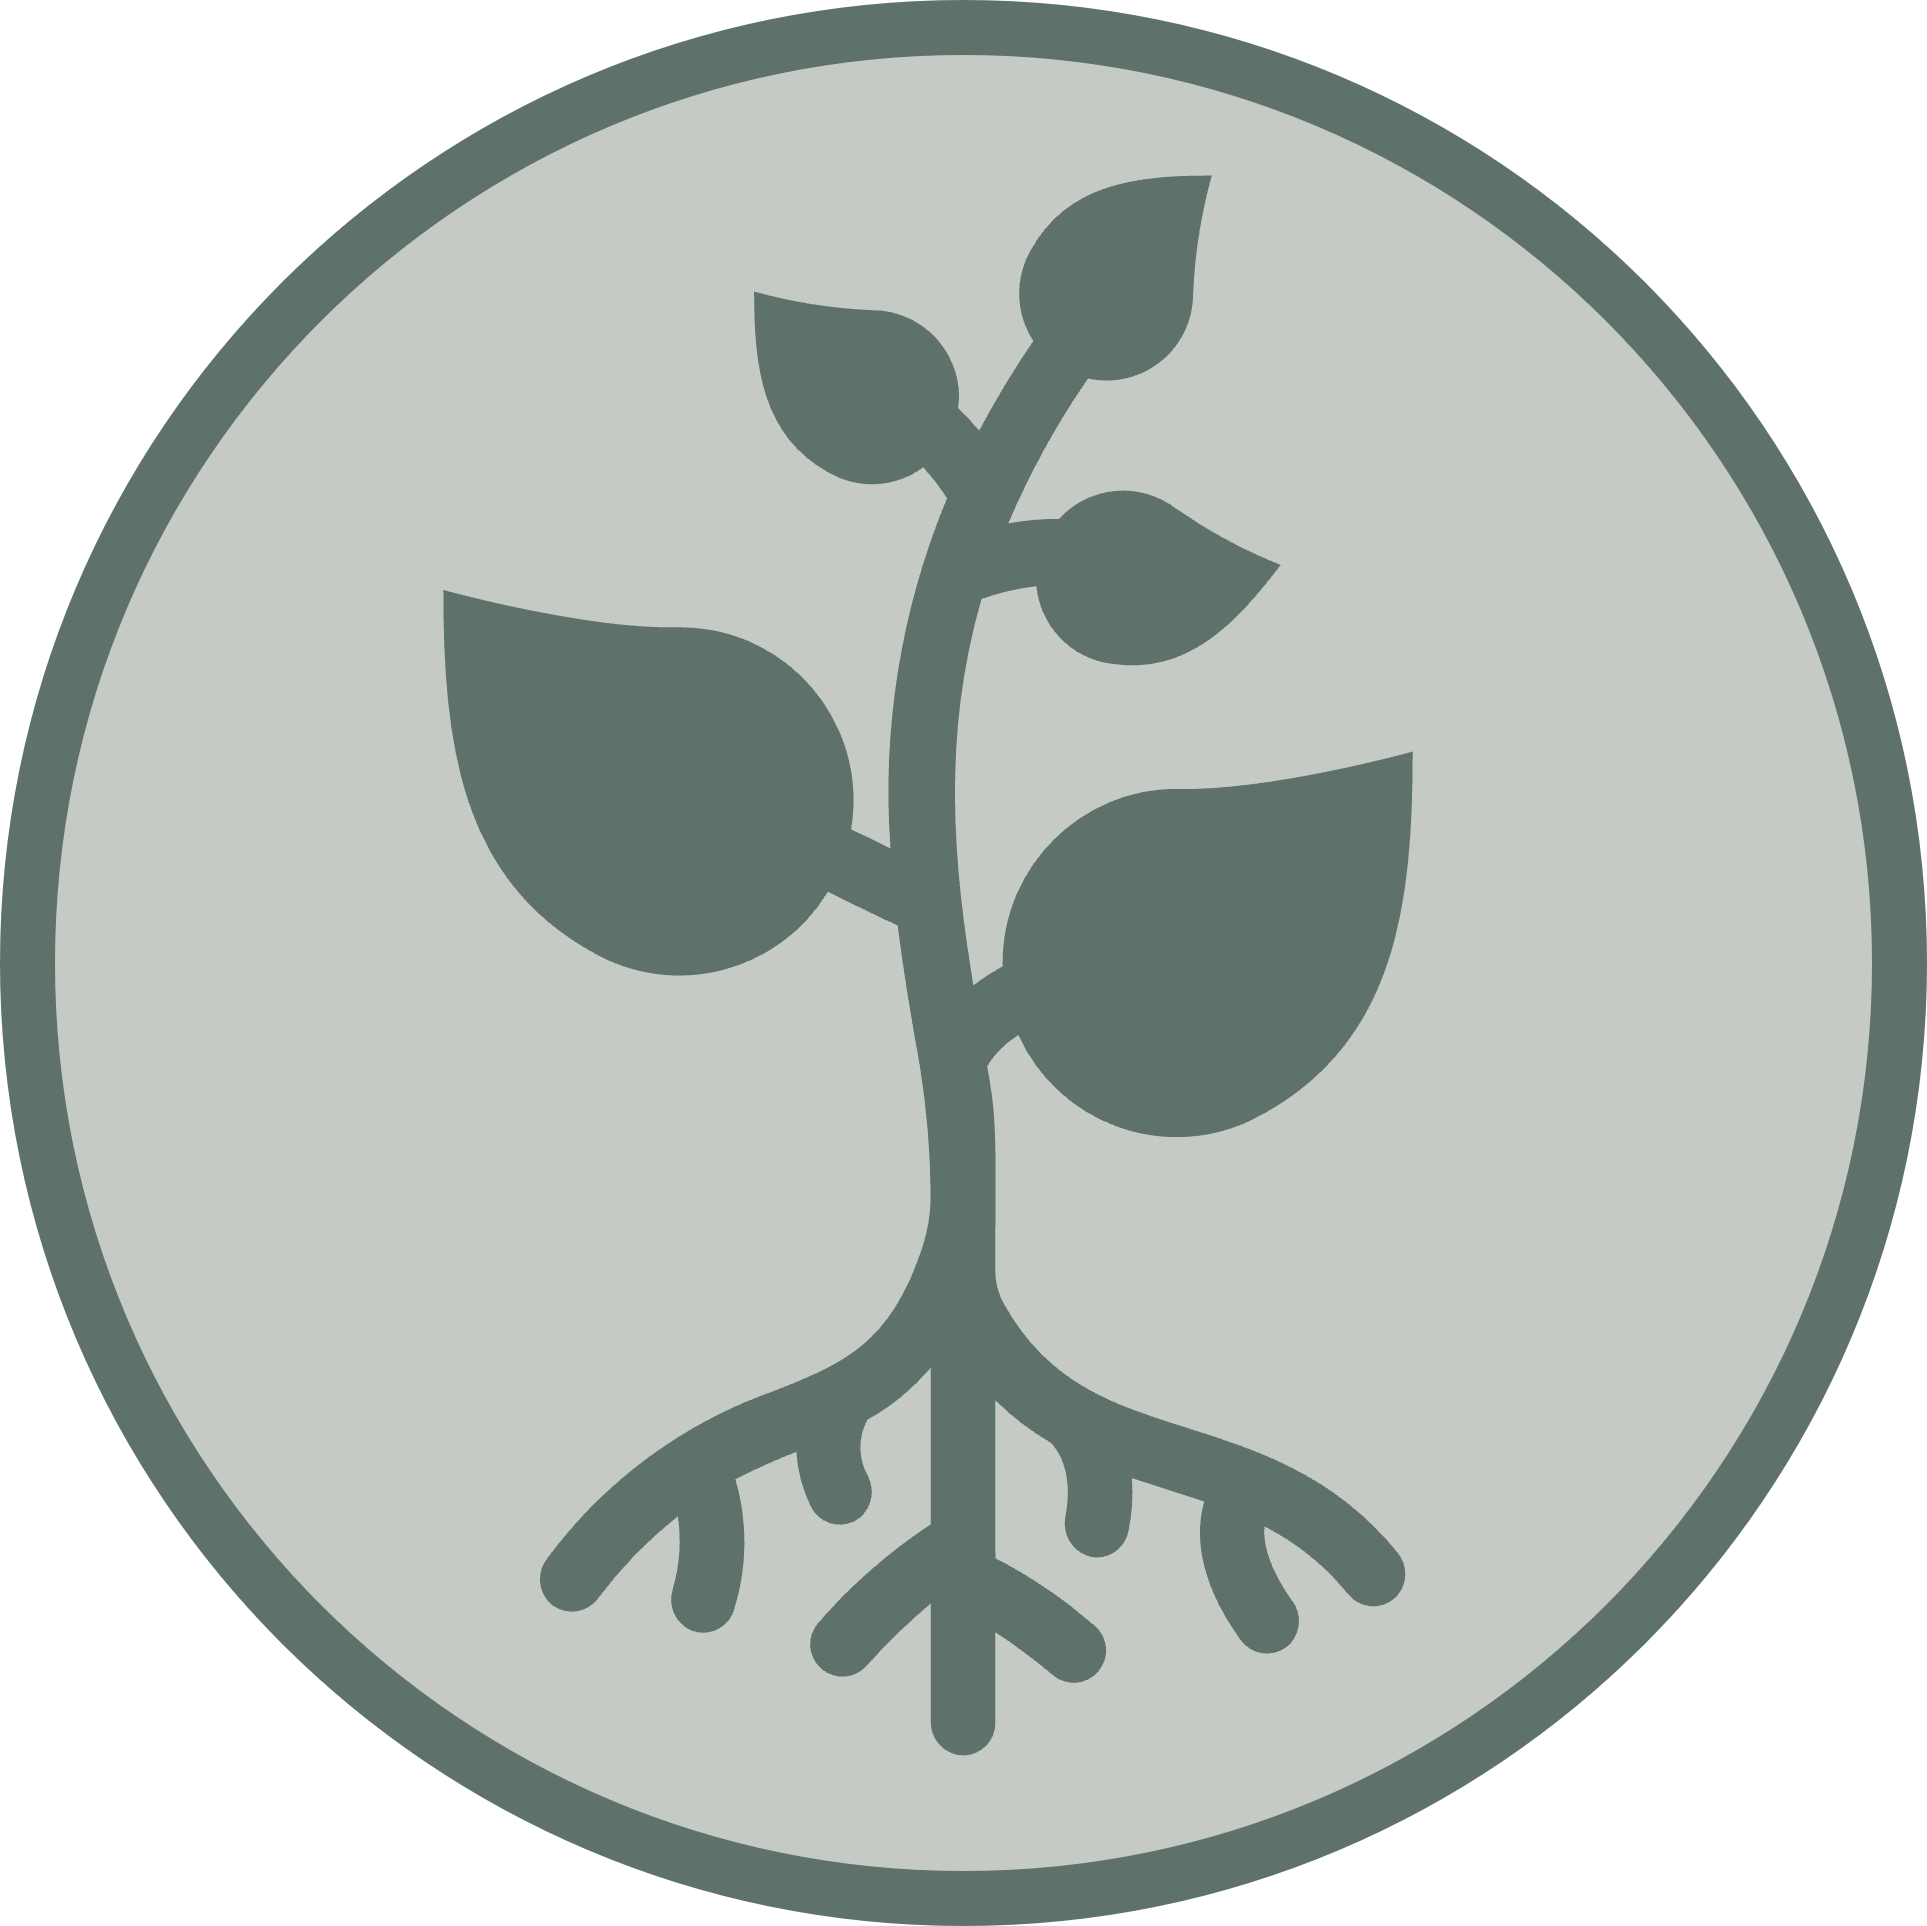 foundations badge: dark green small plant on light green background